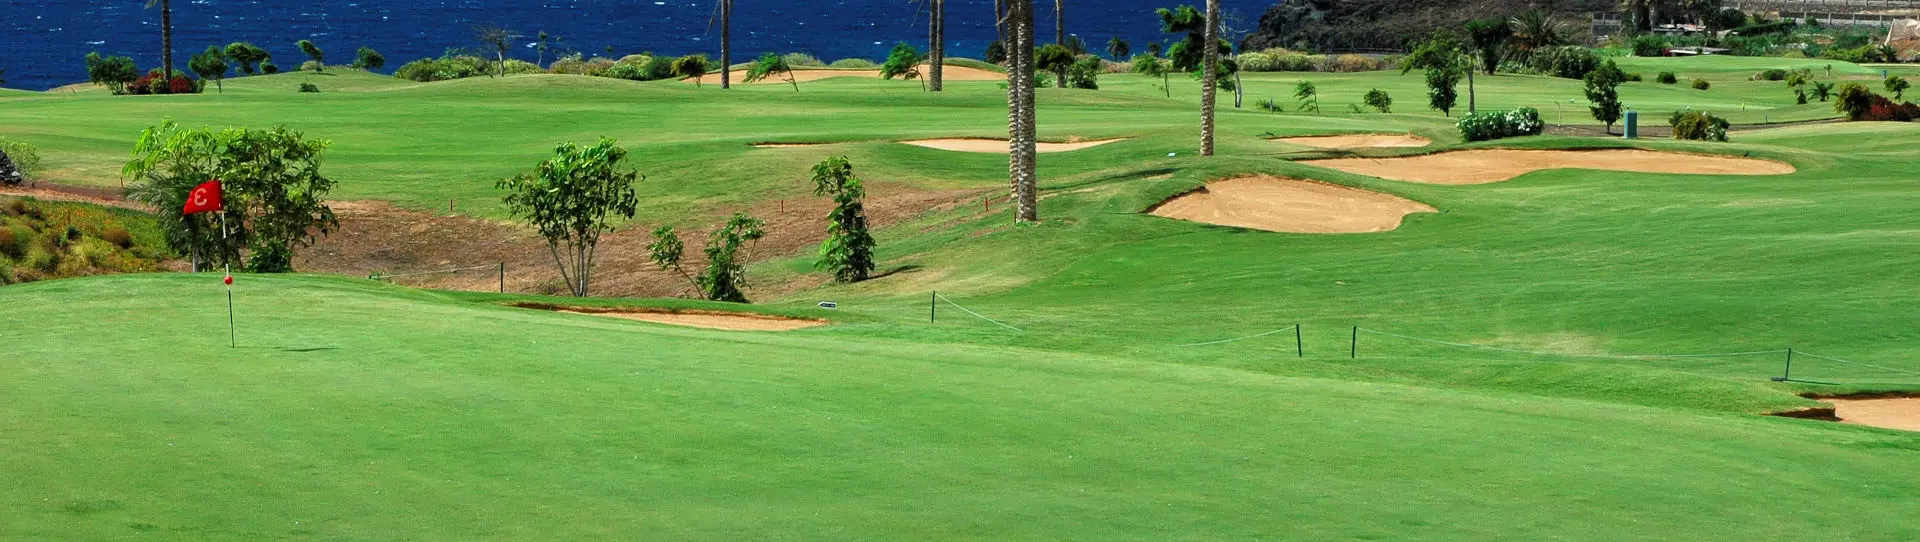 Spain golf courses - Santa Maria Golf & Country Club - Photo 1